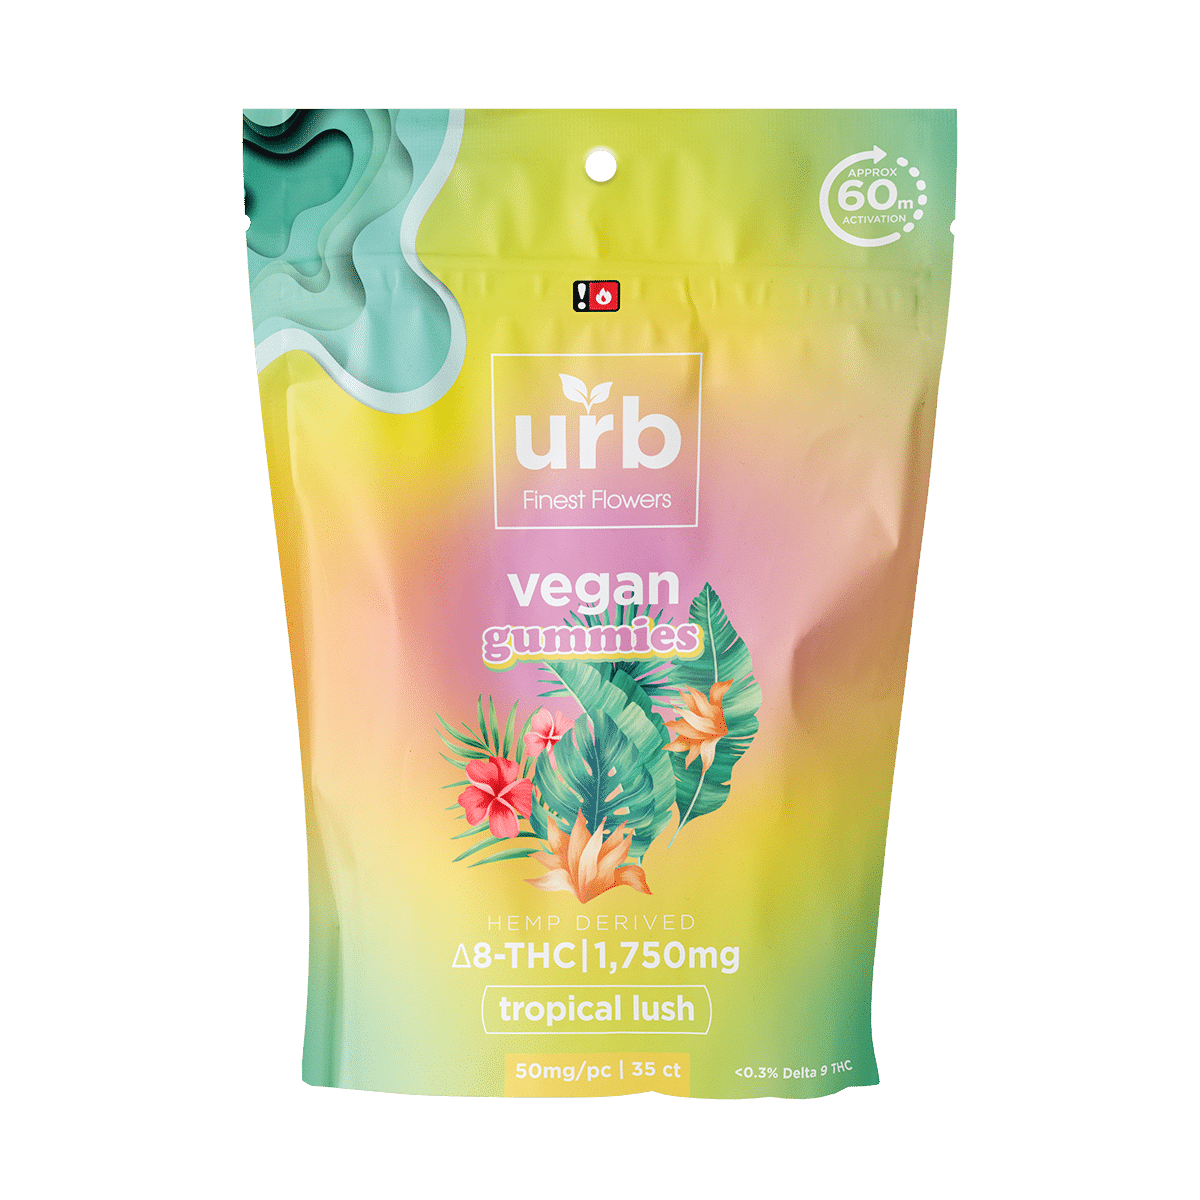 URB Delta 8 Gummies (vegan) | CBD Vegan Gummies | Formulated Wellness